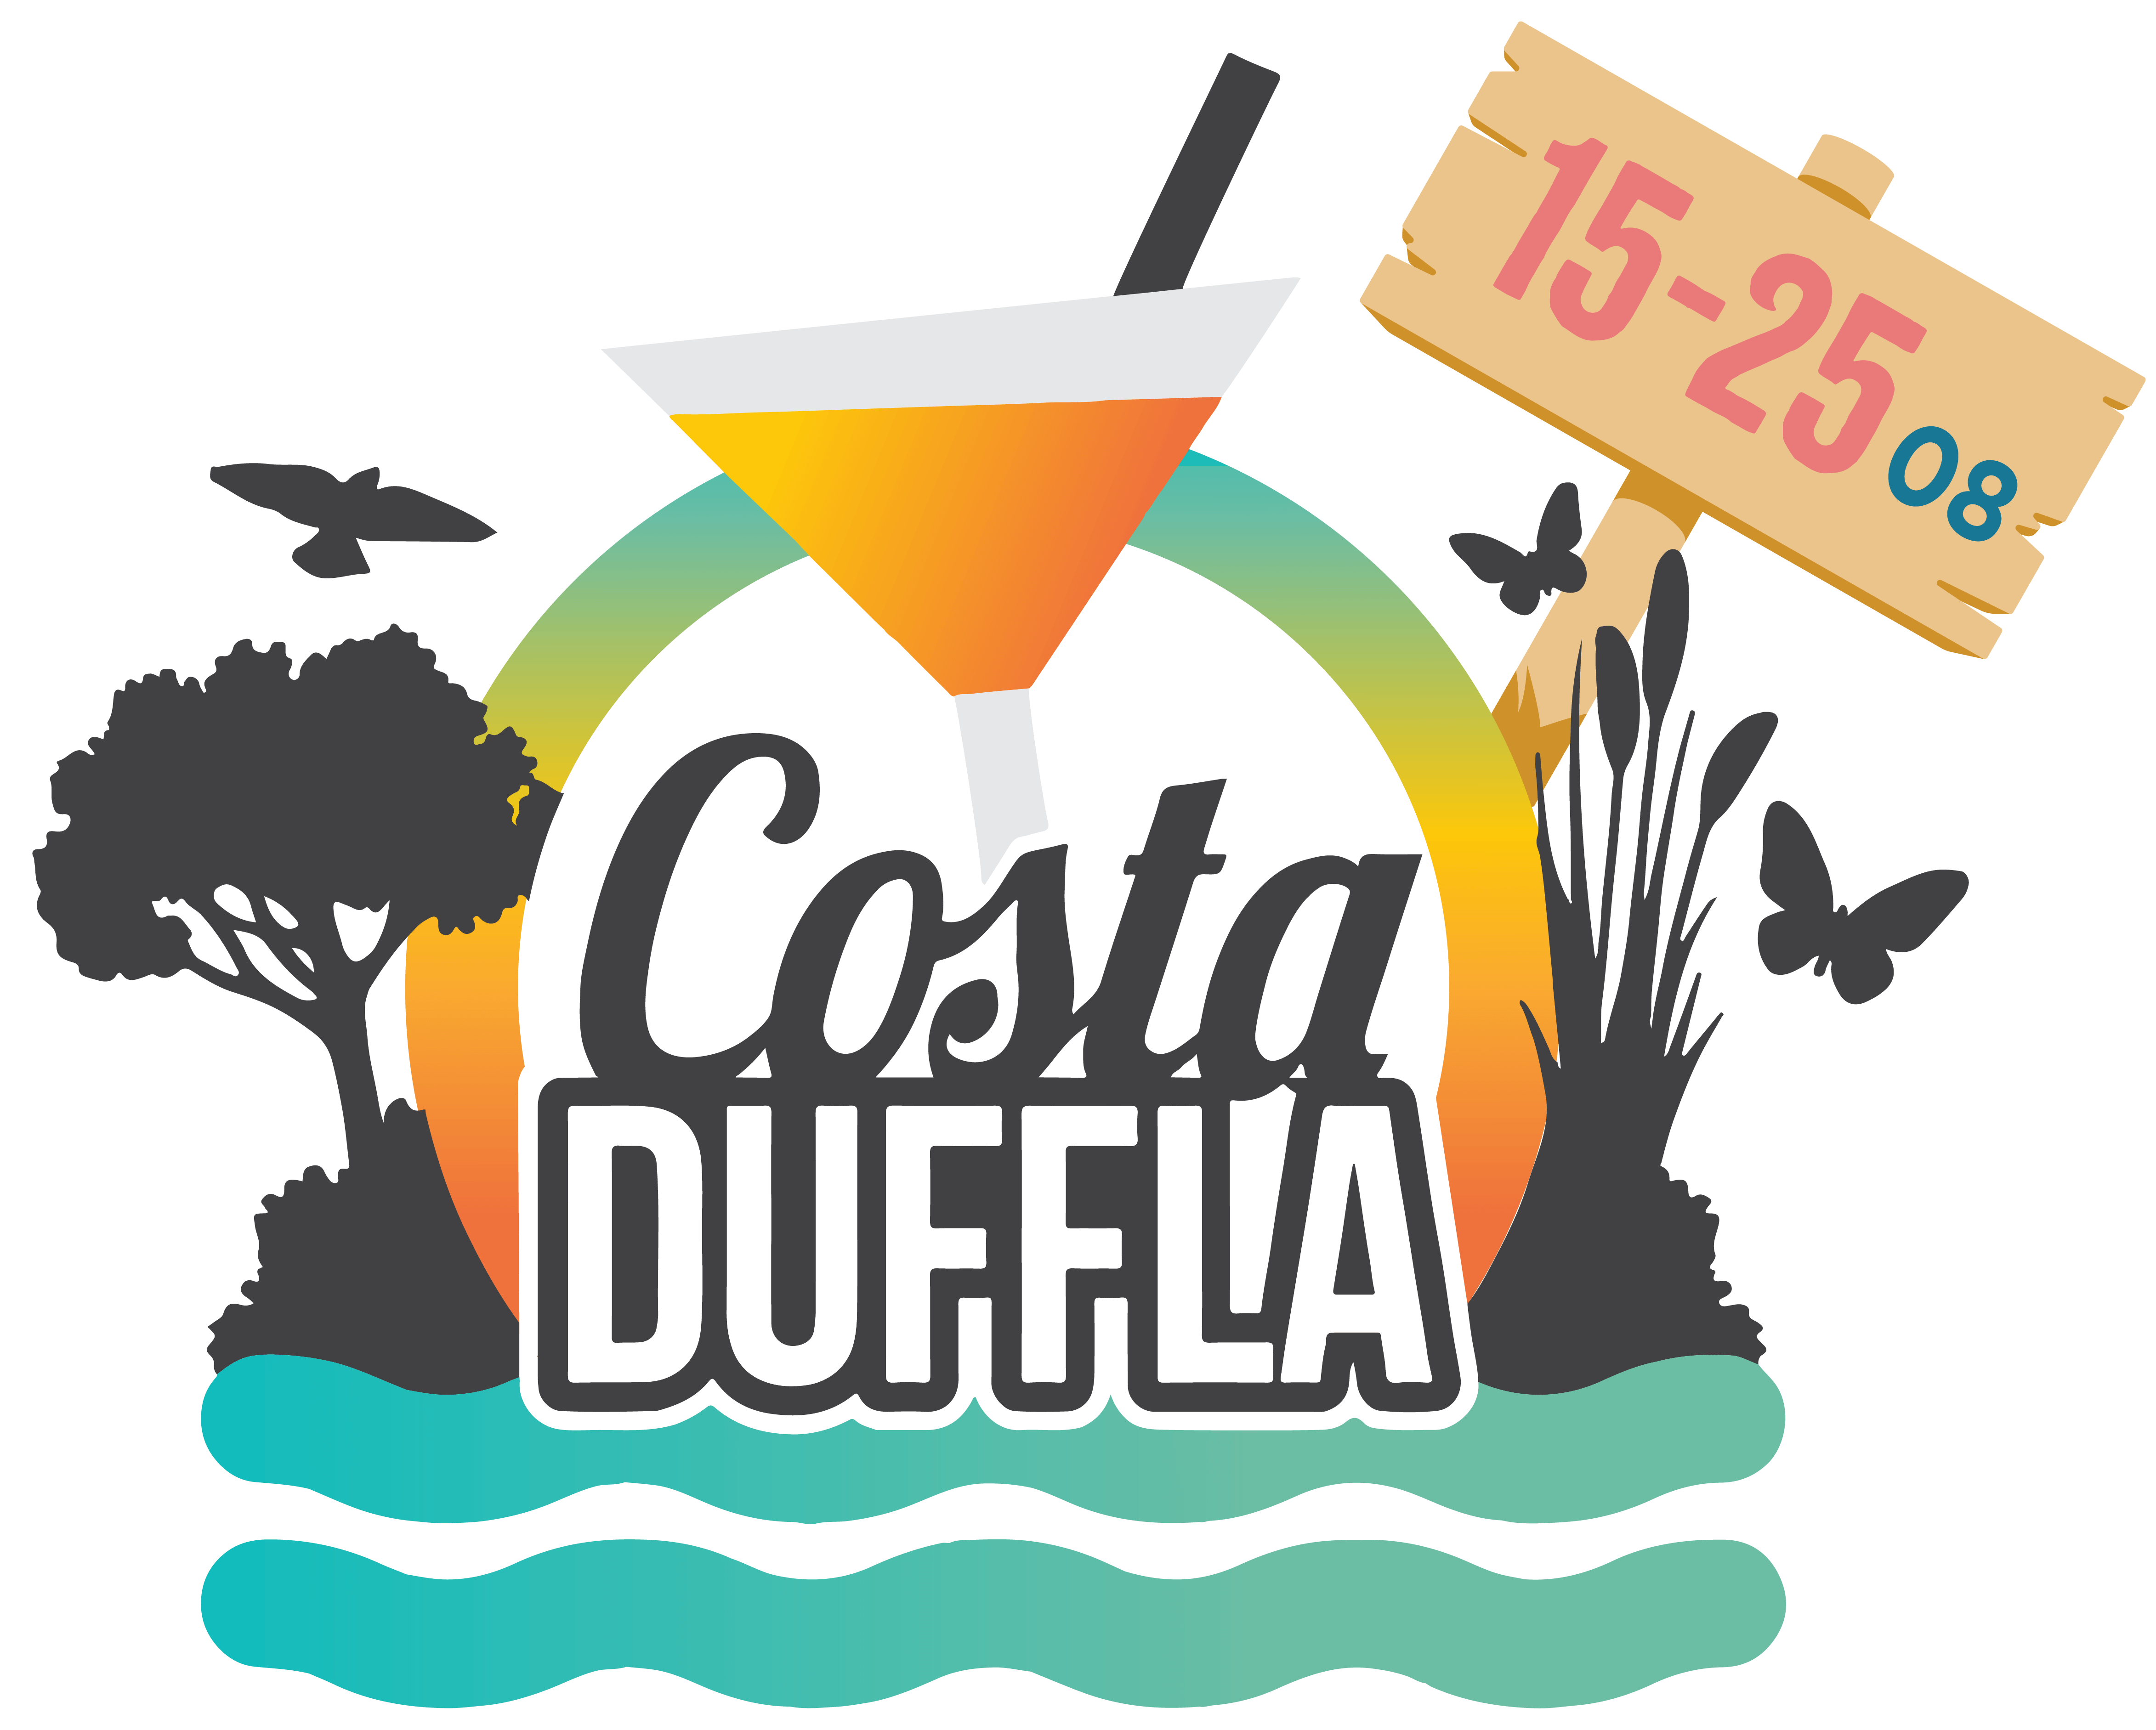 Costa Duffla_logo 2024_no margin